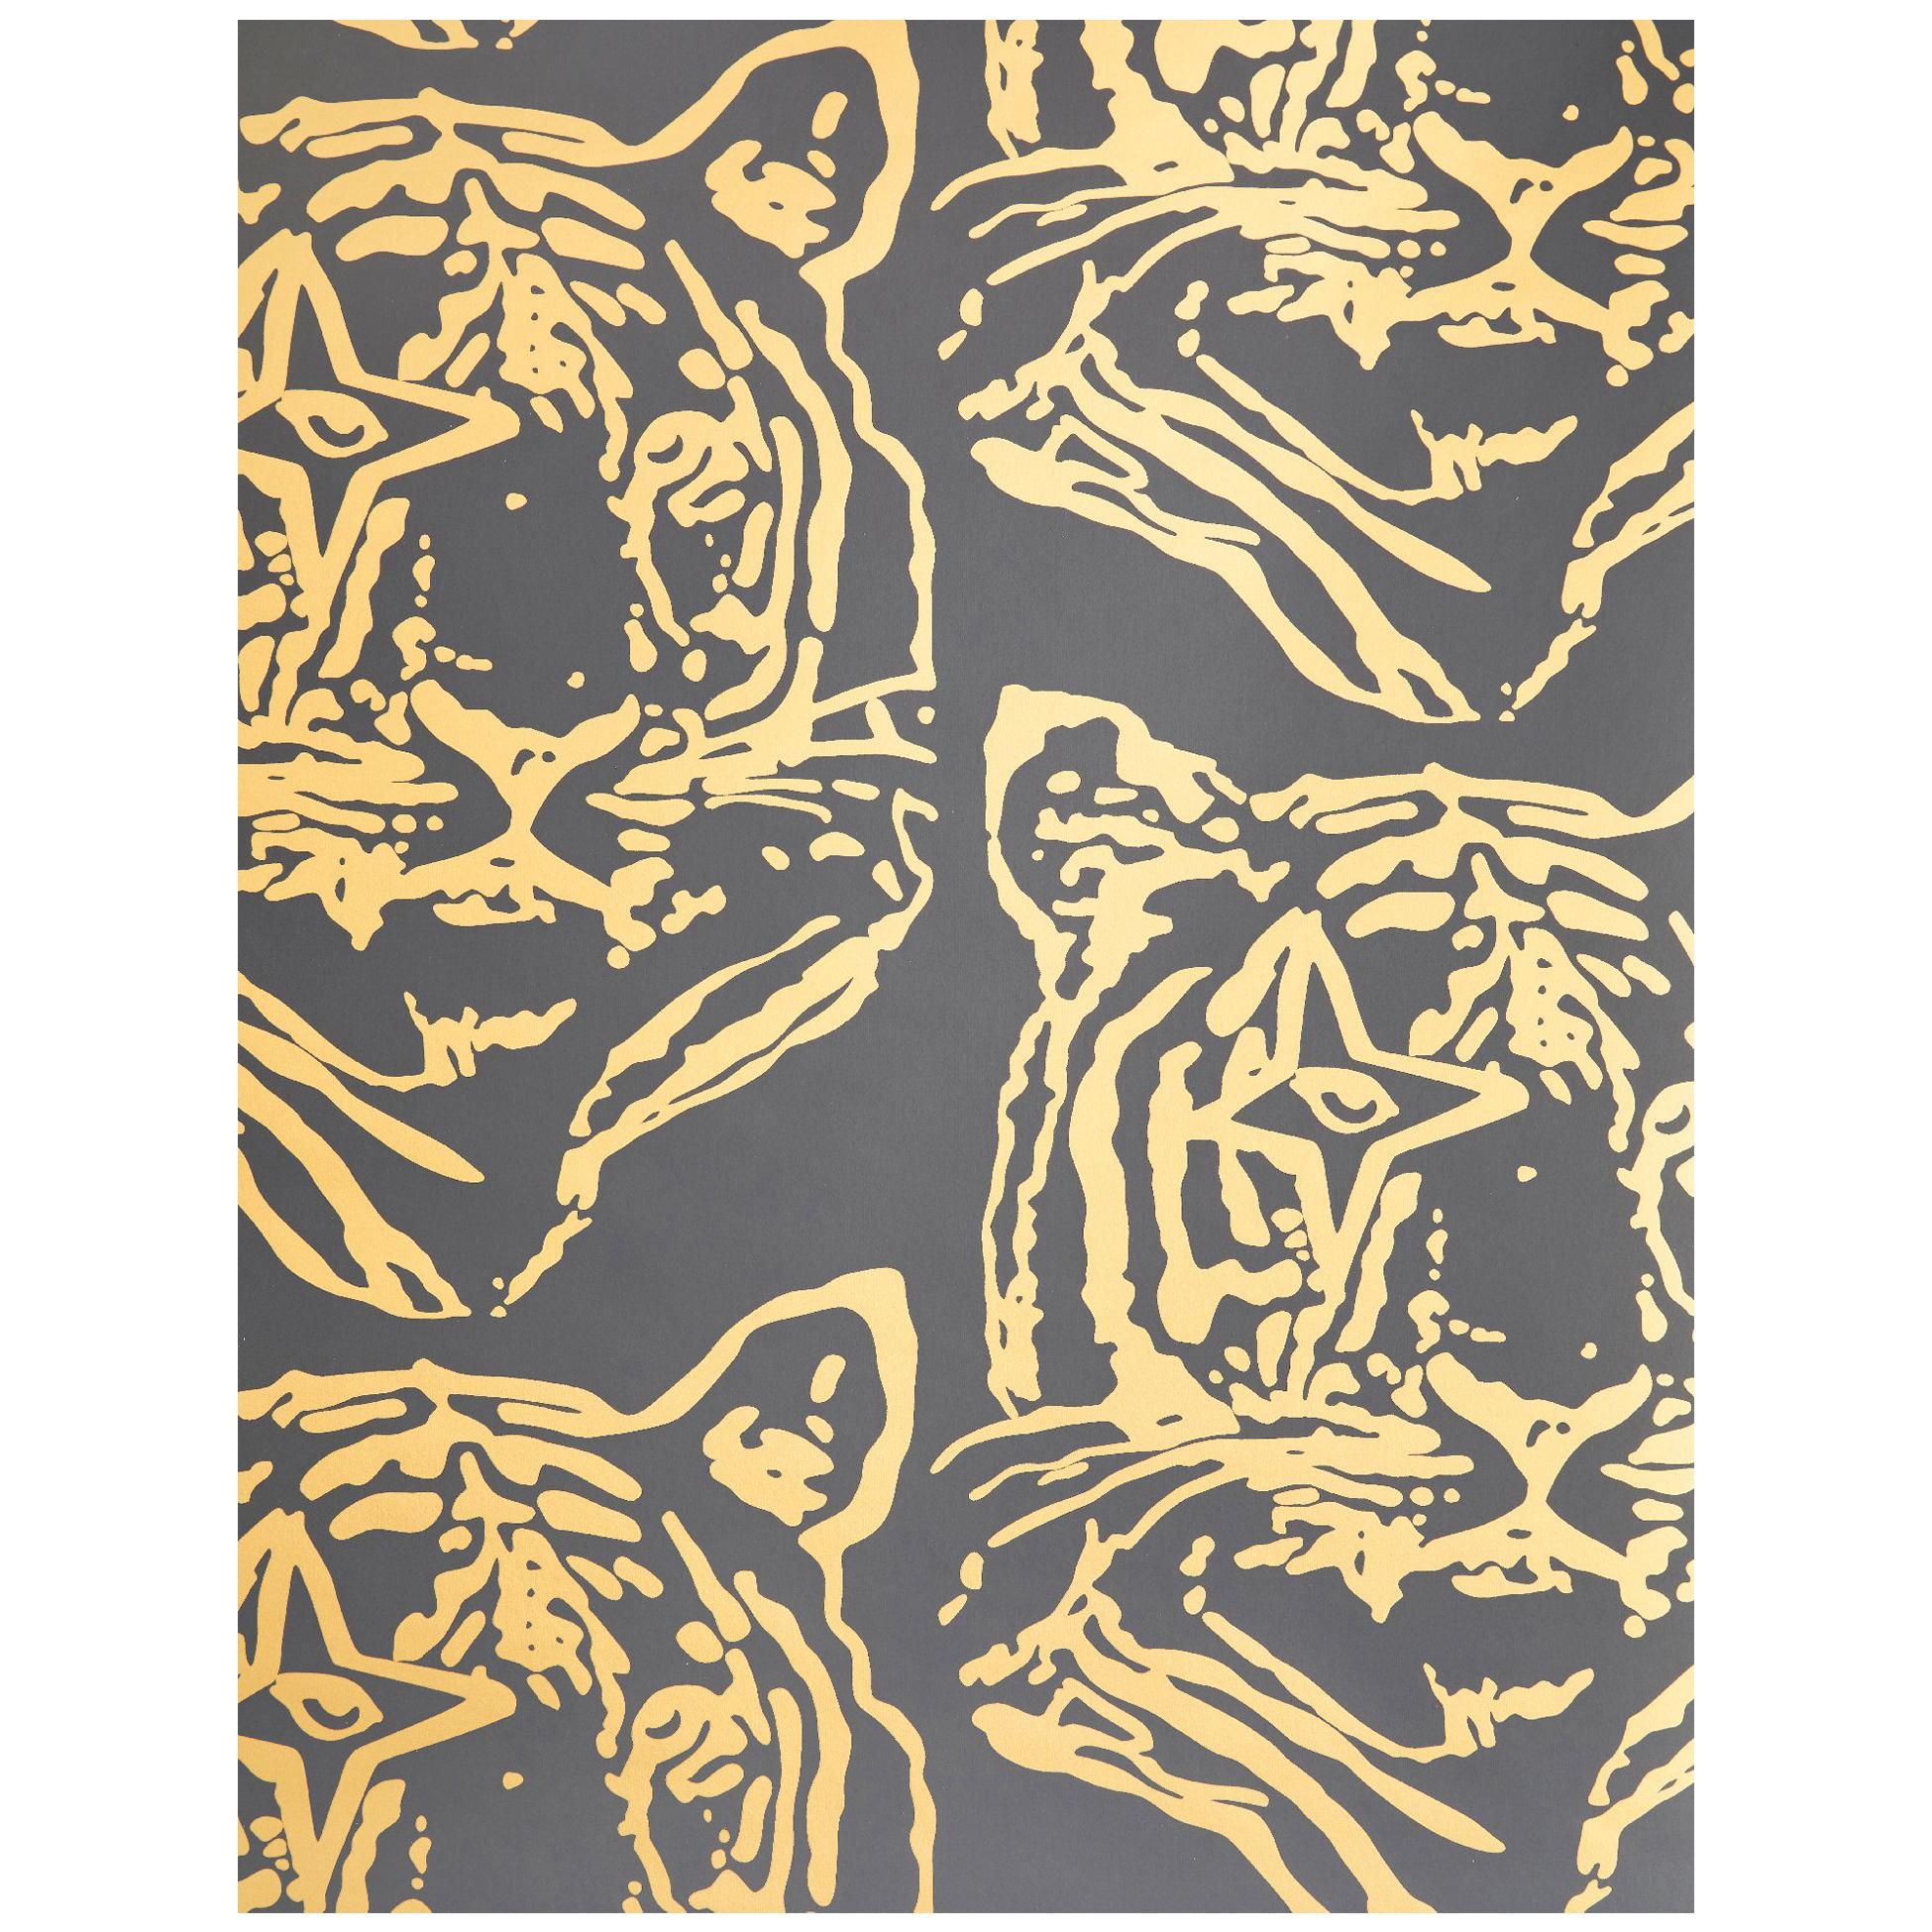 Star Tiger Designer Wallpaper in Eclipse 'Metallic Gold on Black'